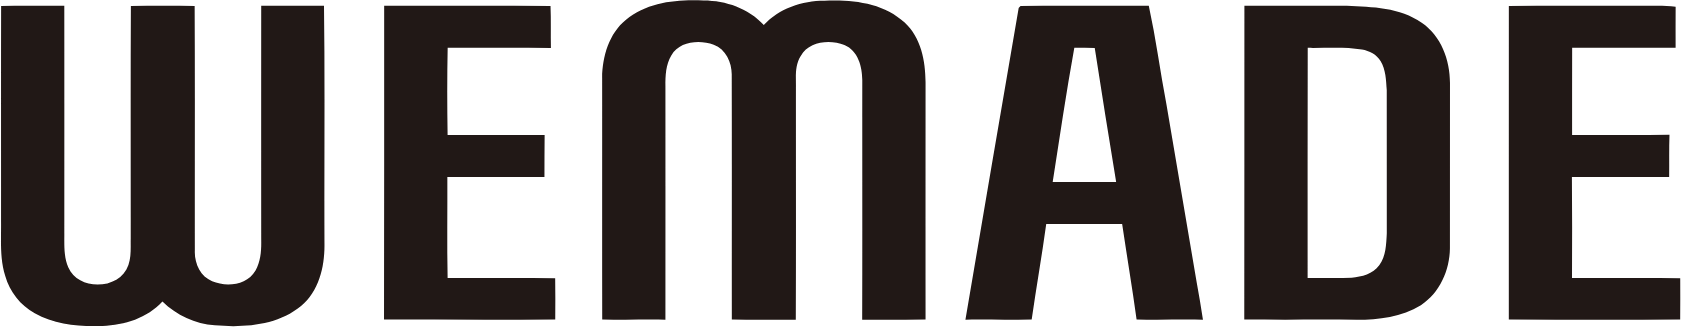 Wemade logo large (transparent PNG)